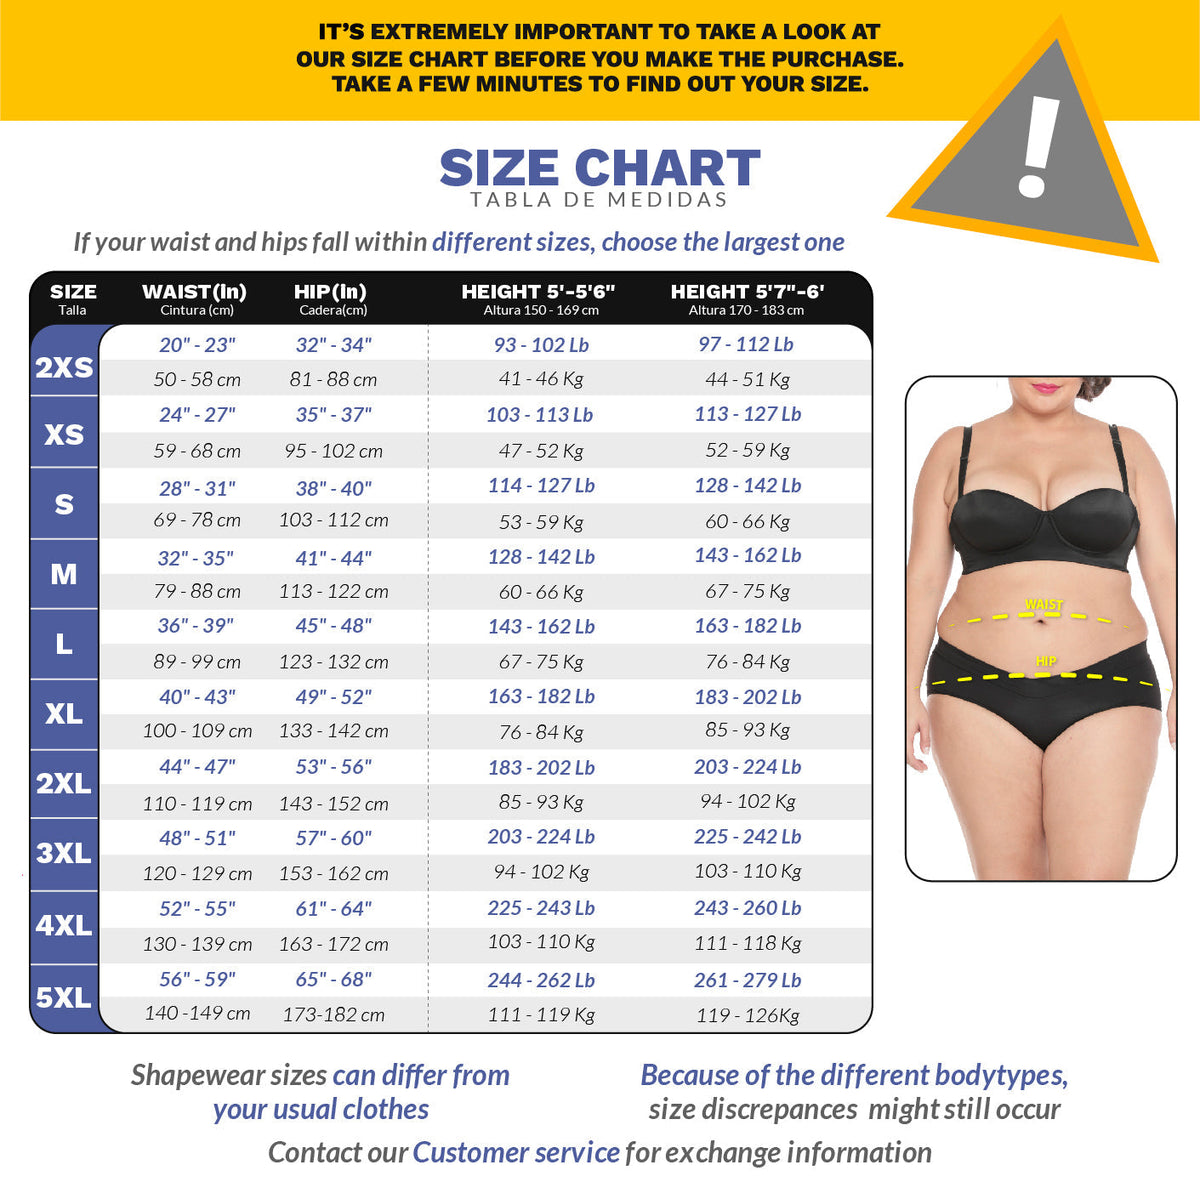 Women's Seamless Thong Bodysuit Slimming Faja | Strapless Tummy Control Shapewear / Latex Diane & Geordi 002374